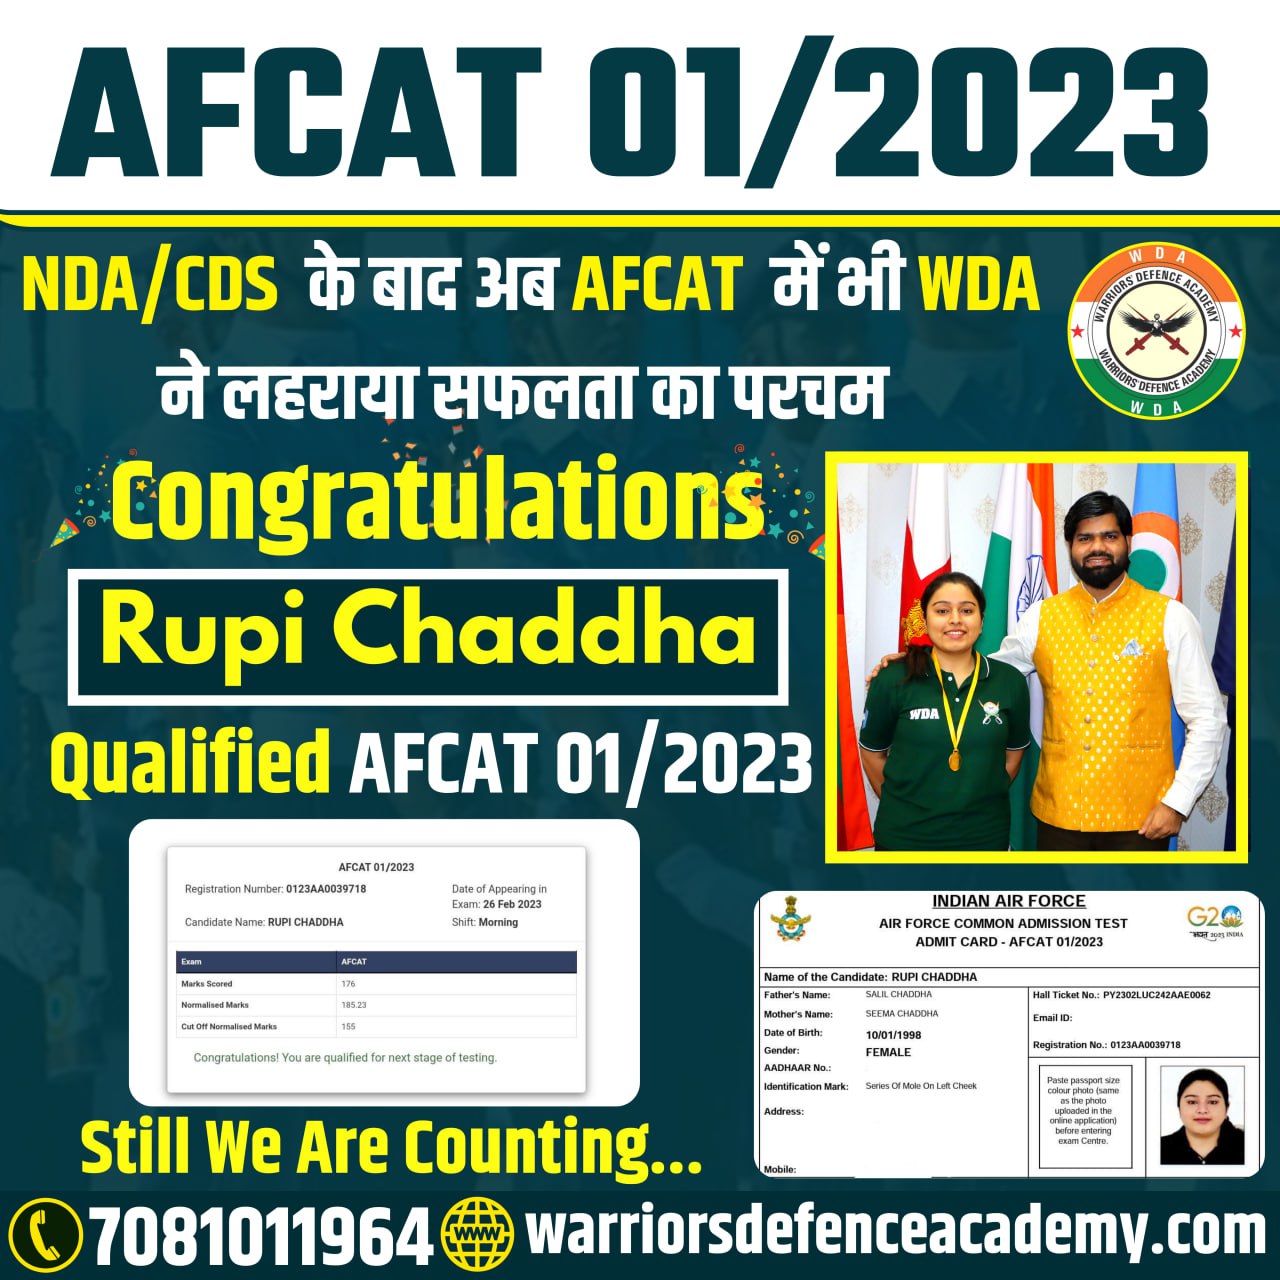 #Best NDA Coaching in India